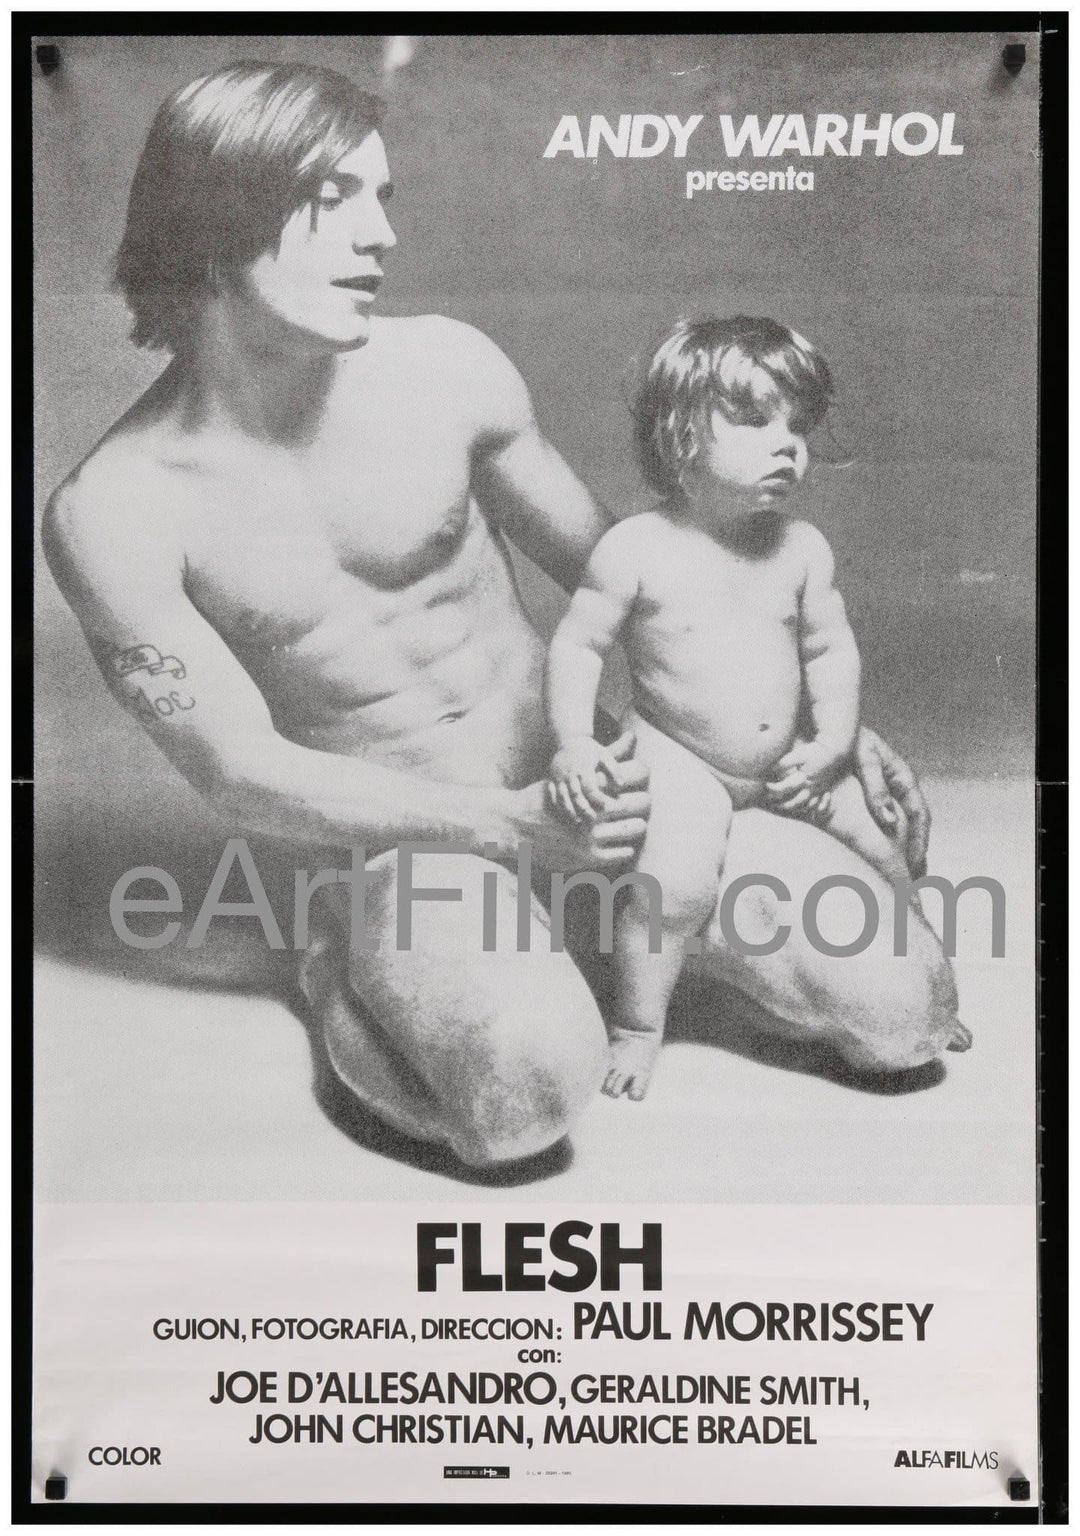 eArtFilm.com Spain (27"x39.5") Andy Warhol's Flesh 1968 27x39.5 Original 1982 Release in Spain Poster